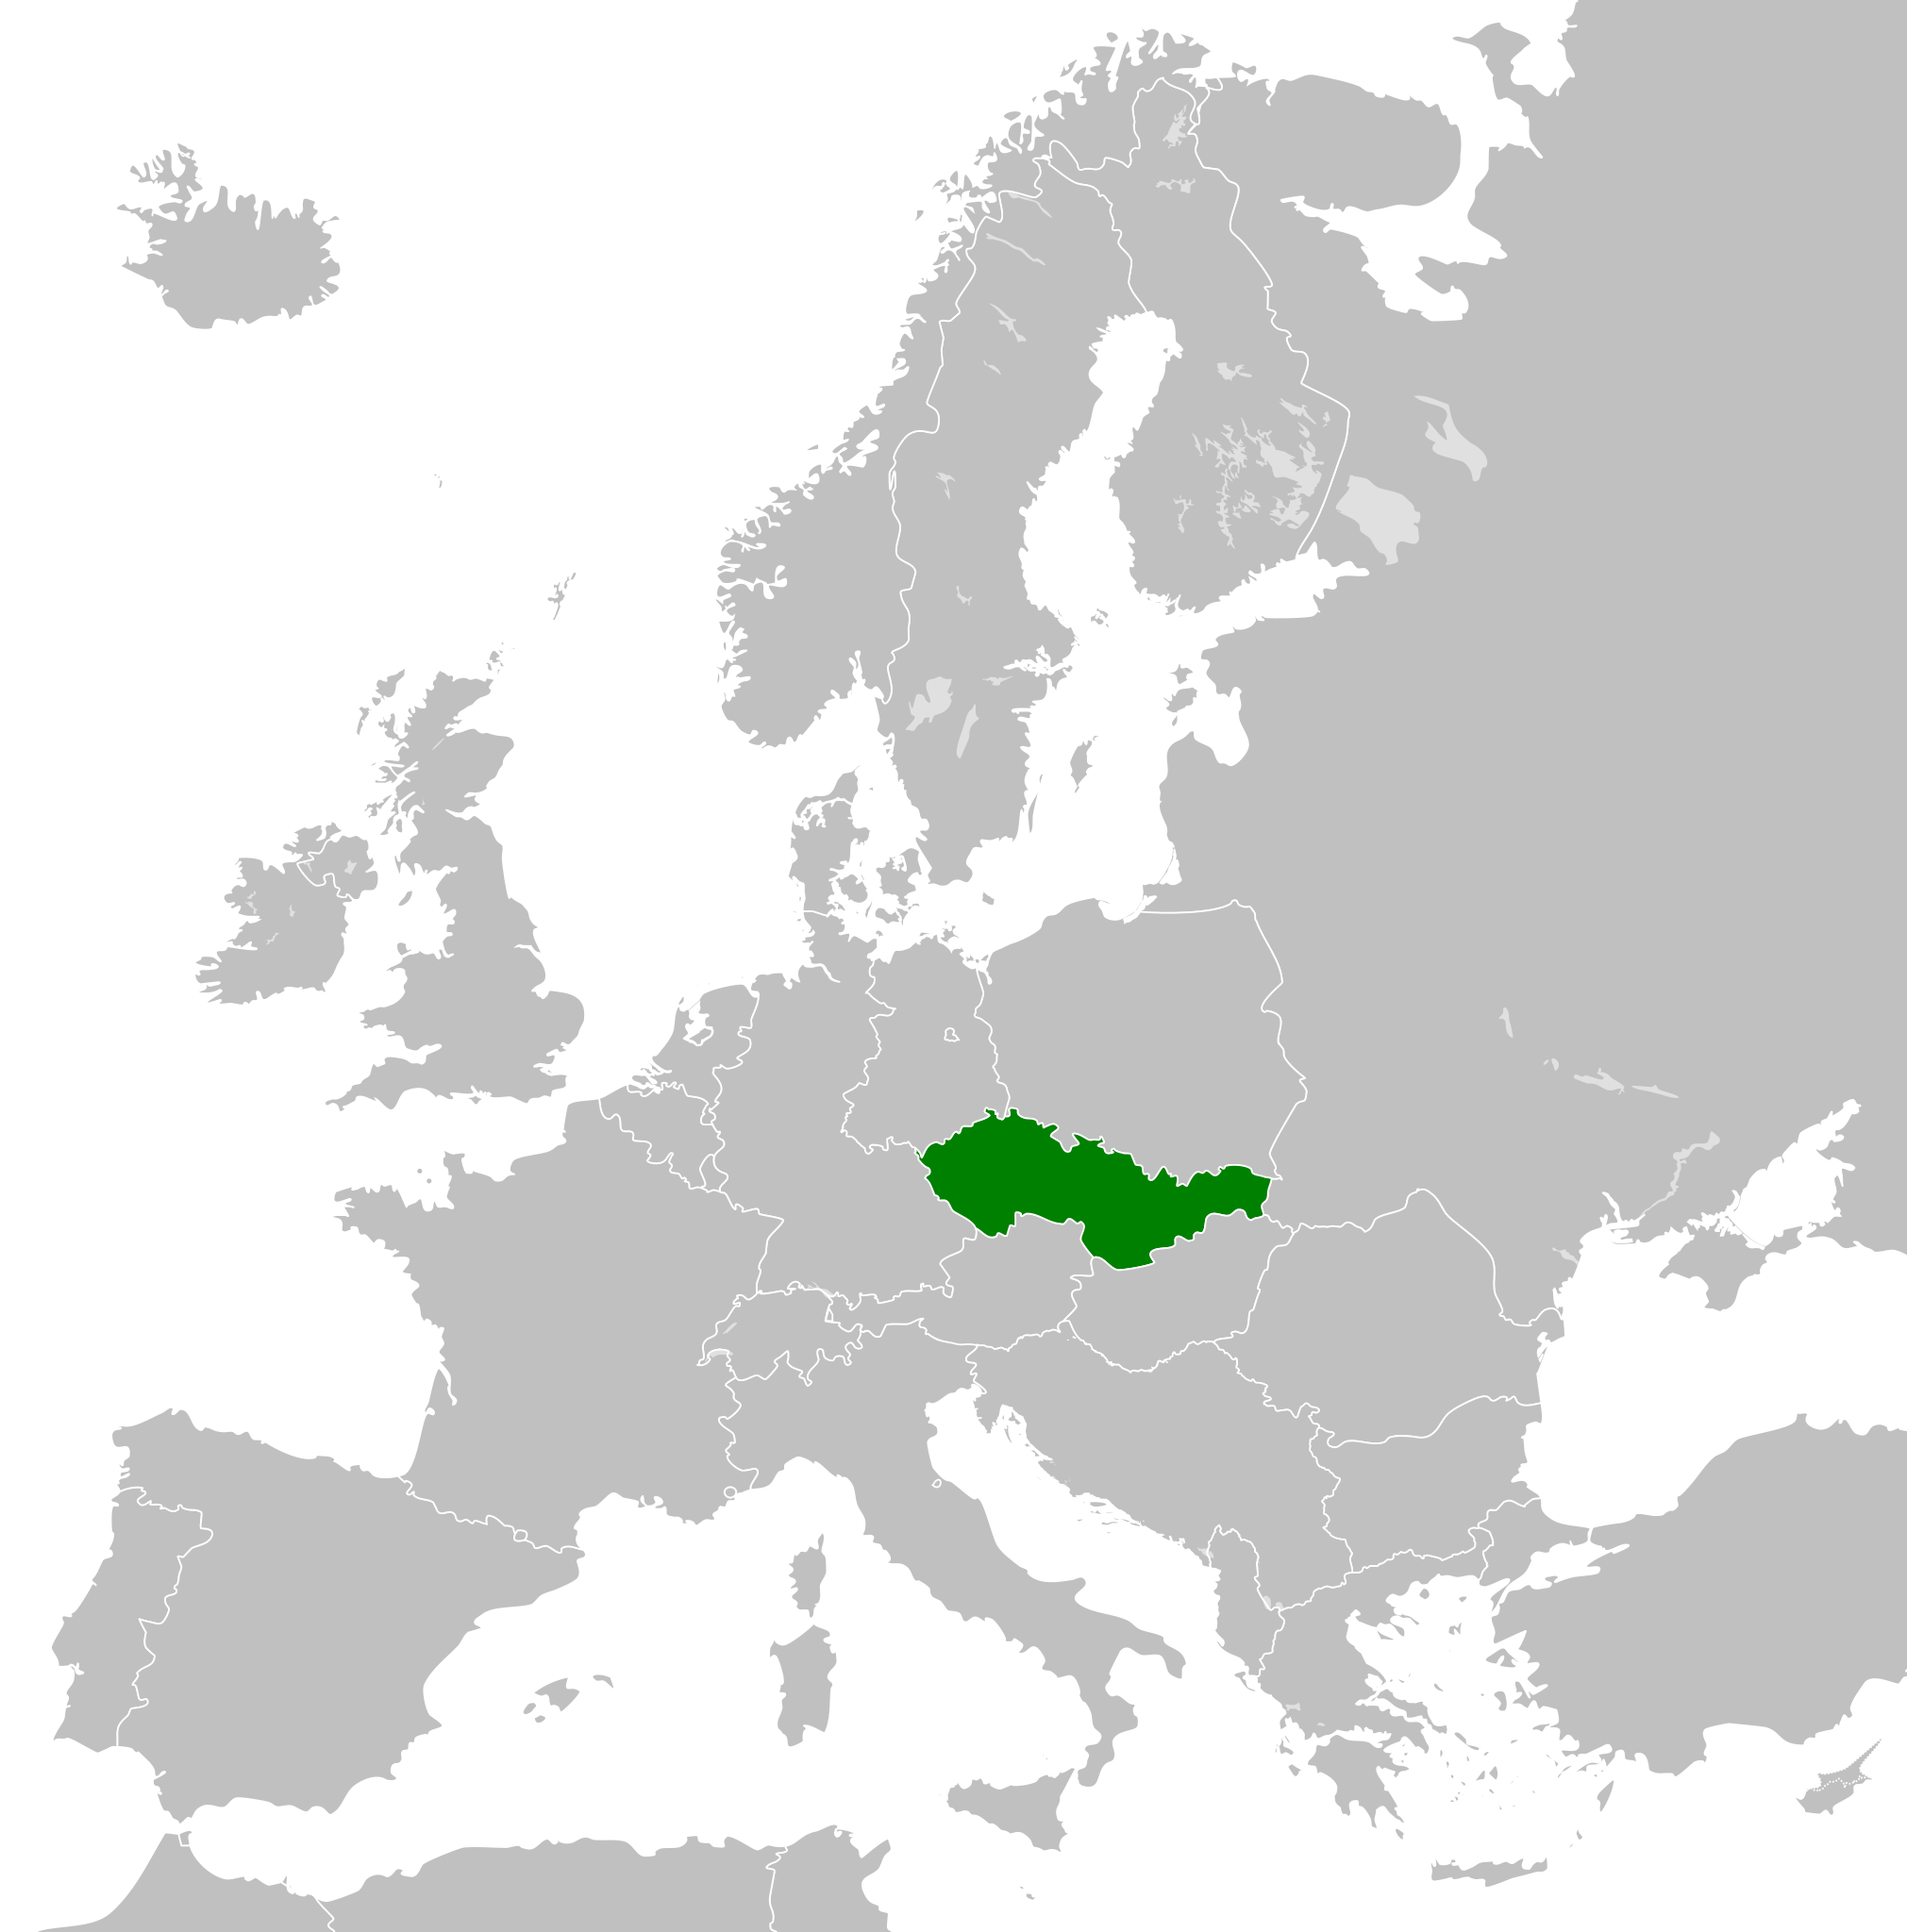 Location of Czechoslovak Socialist Republic